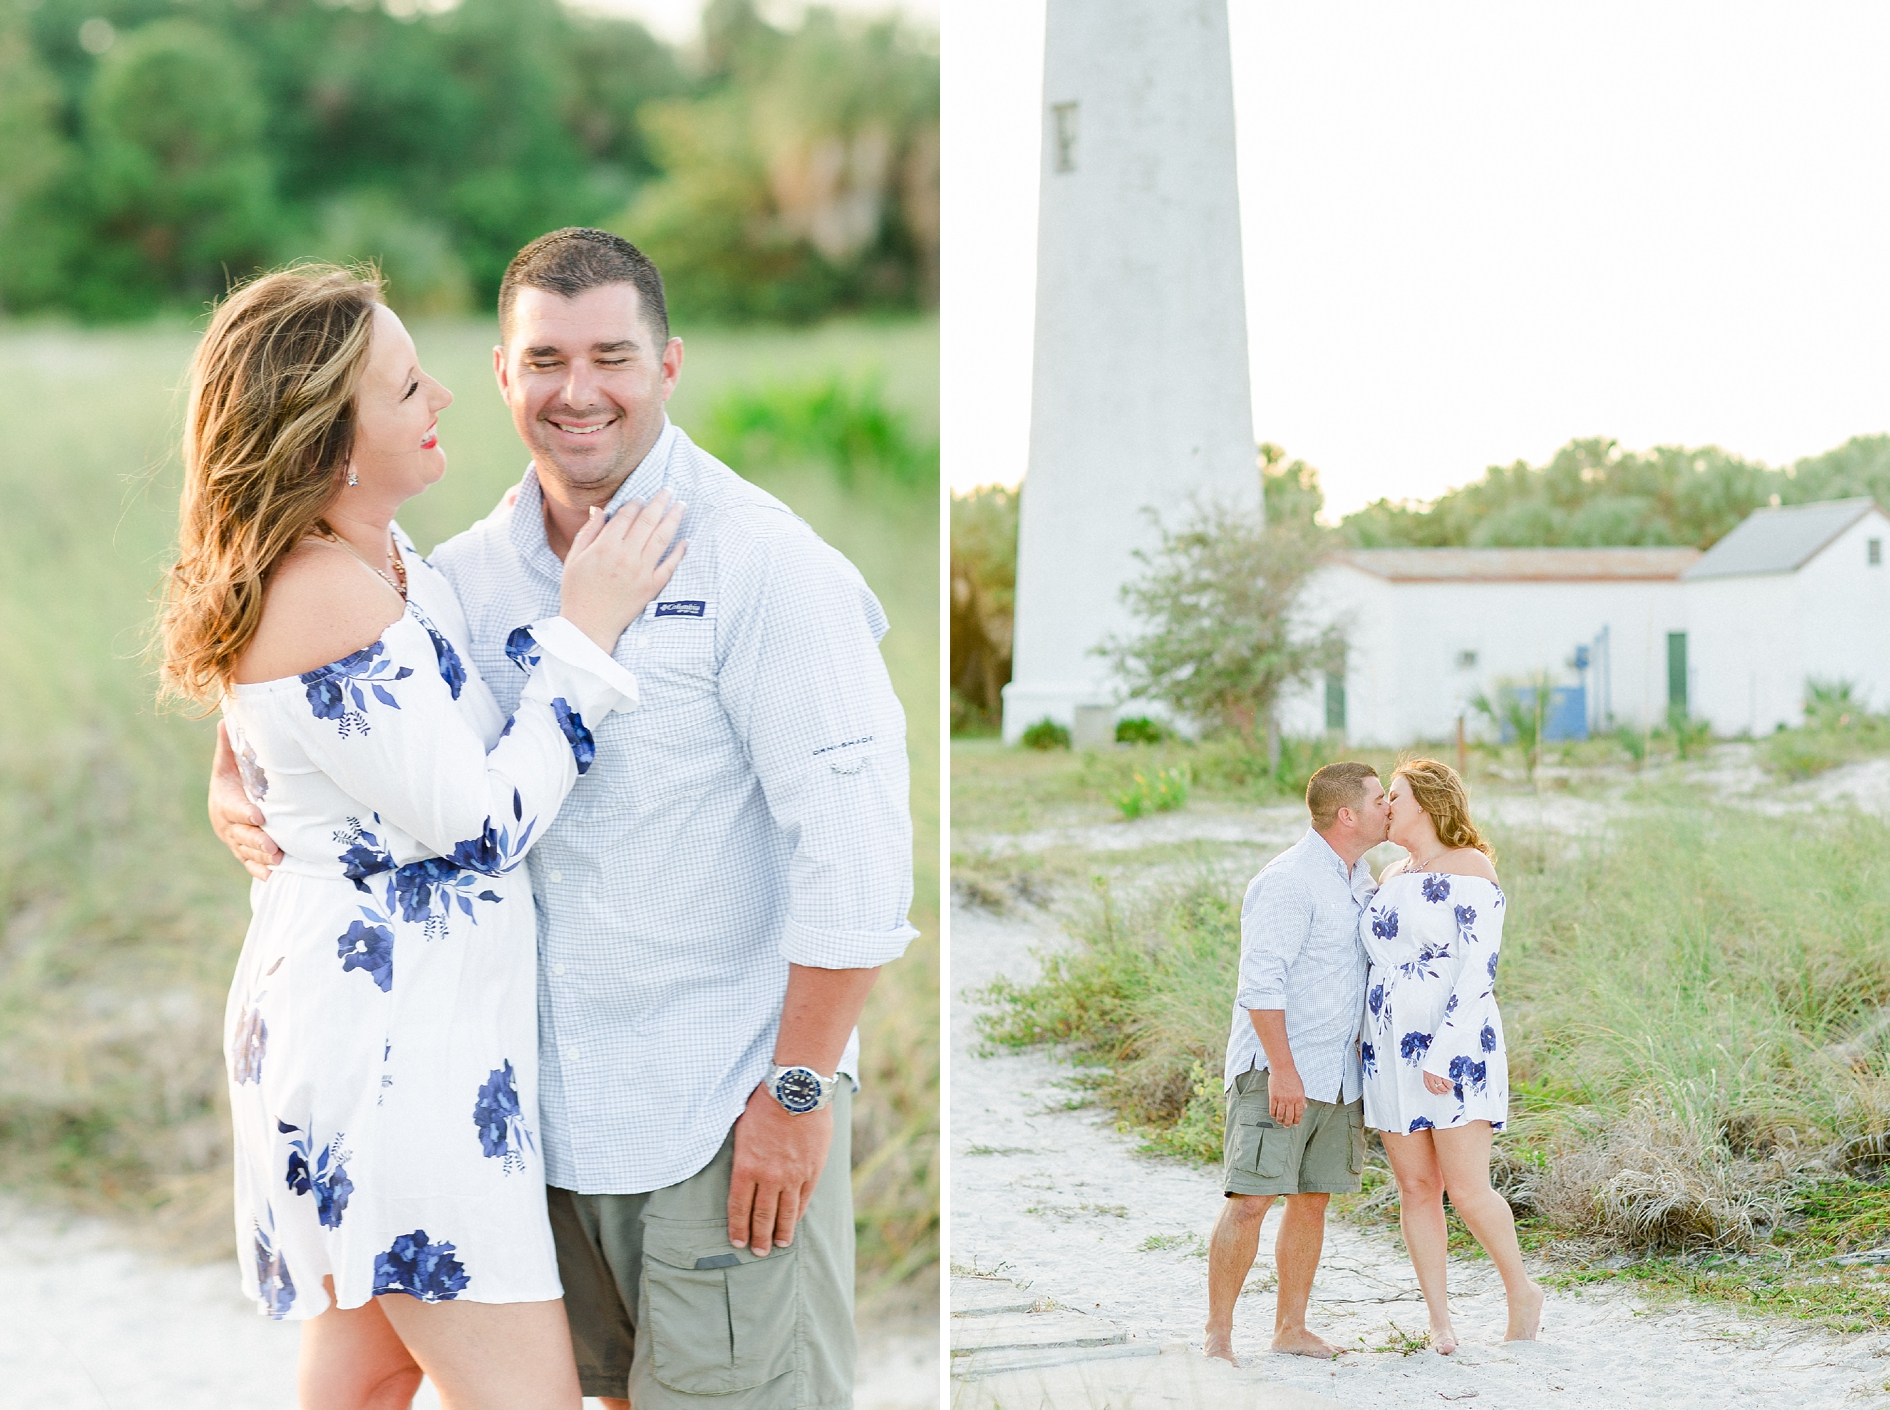 Ft. Desoto Engagement | Christina and James, Florida | © Ailyn La Torre Photography 2017